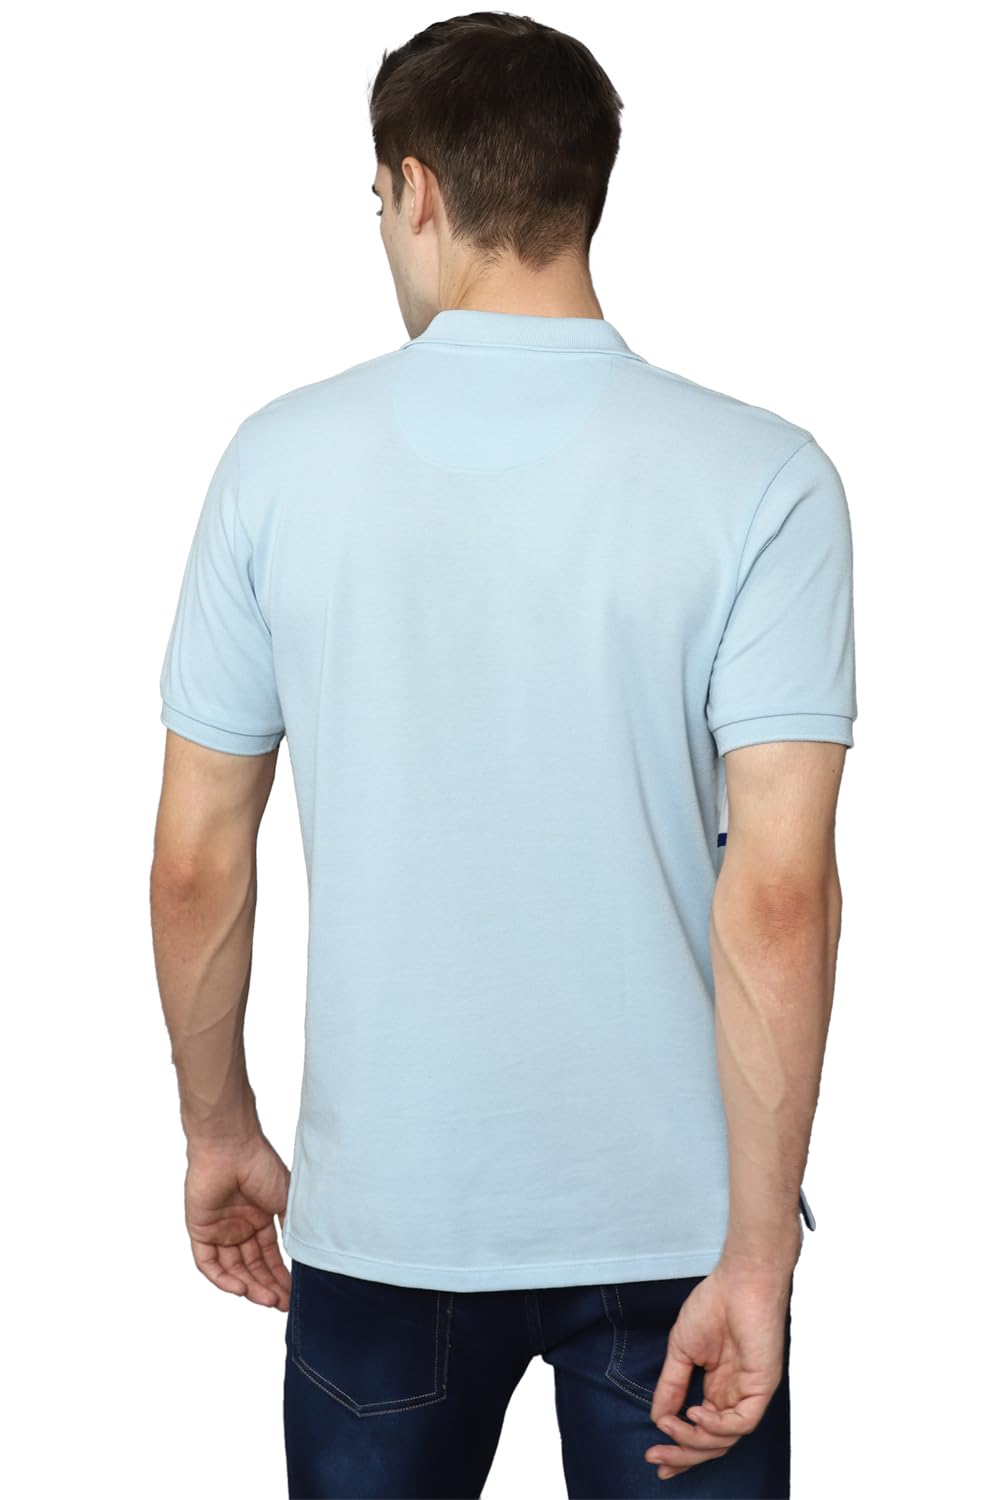 Allen Solly Men's Regular Fit T-Shirt (ASKPCURGF454358_Blue L)